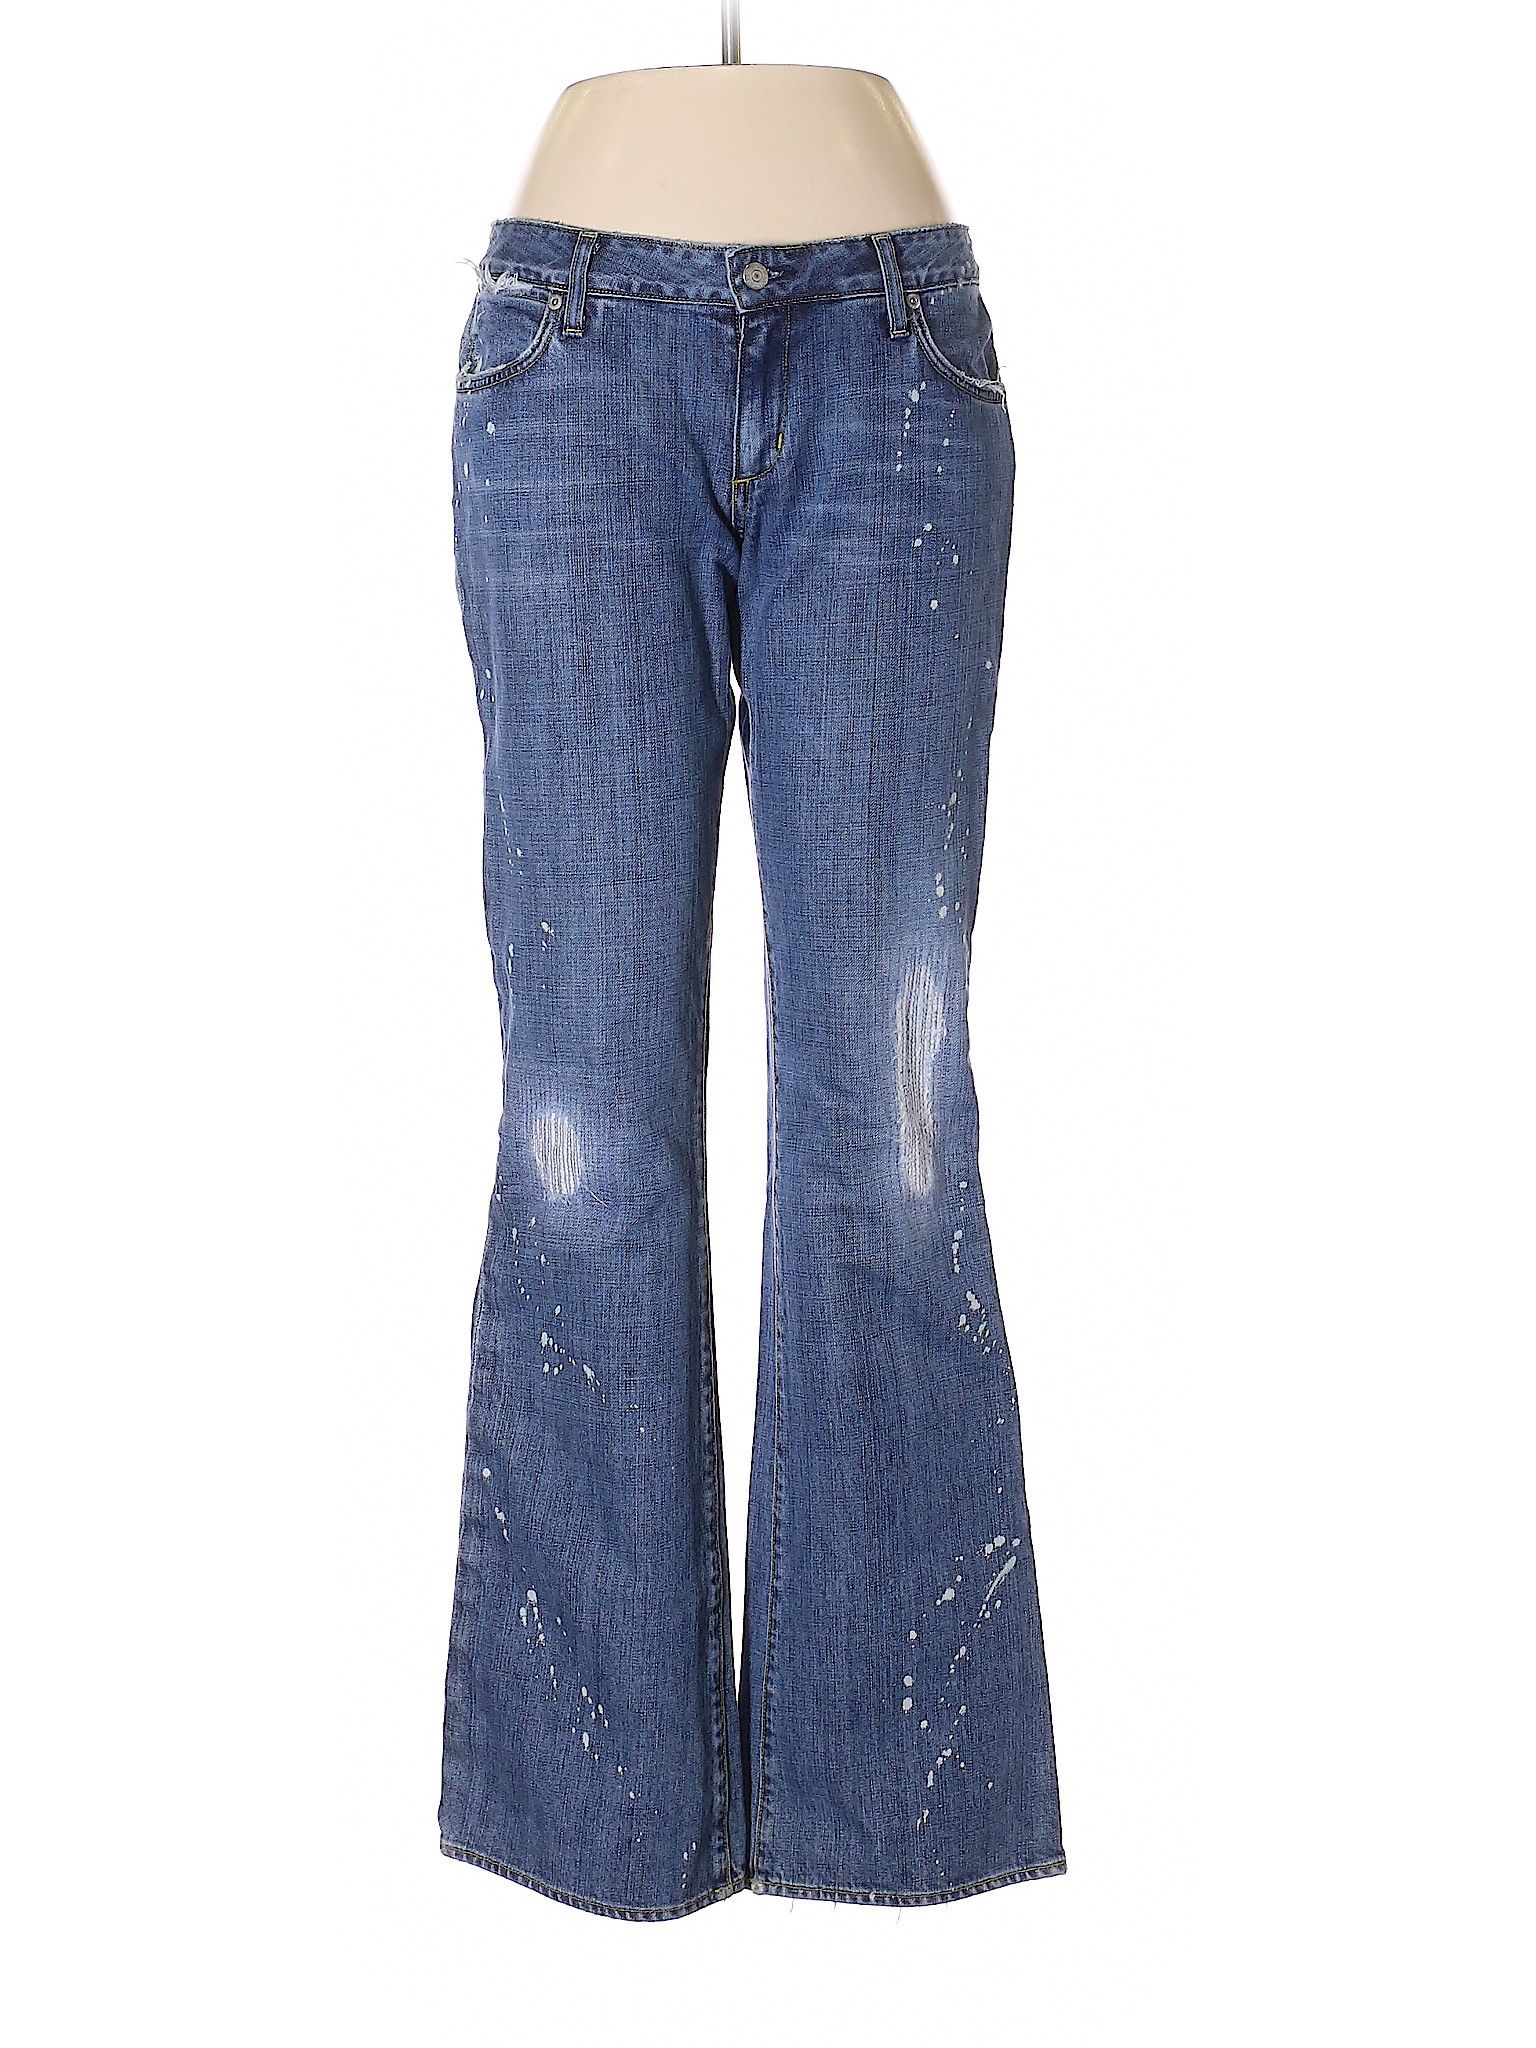 Paper Denim & Cloth Women Blue Jeans 31W | eBay